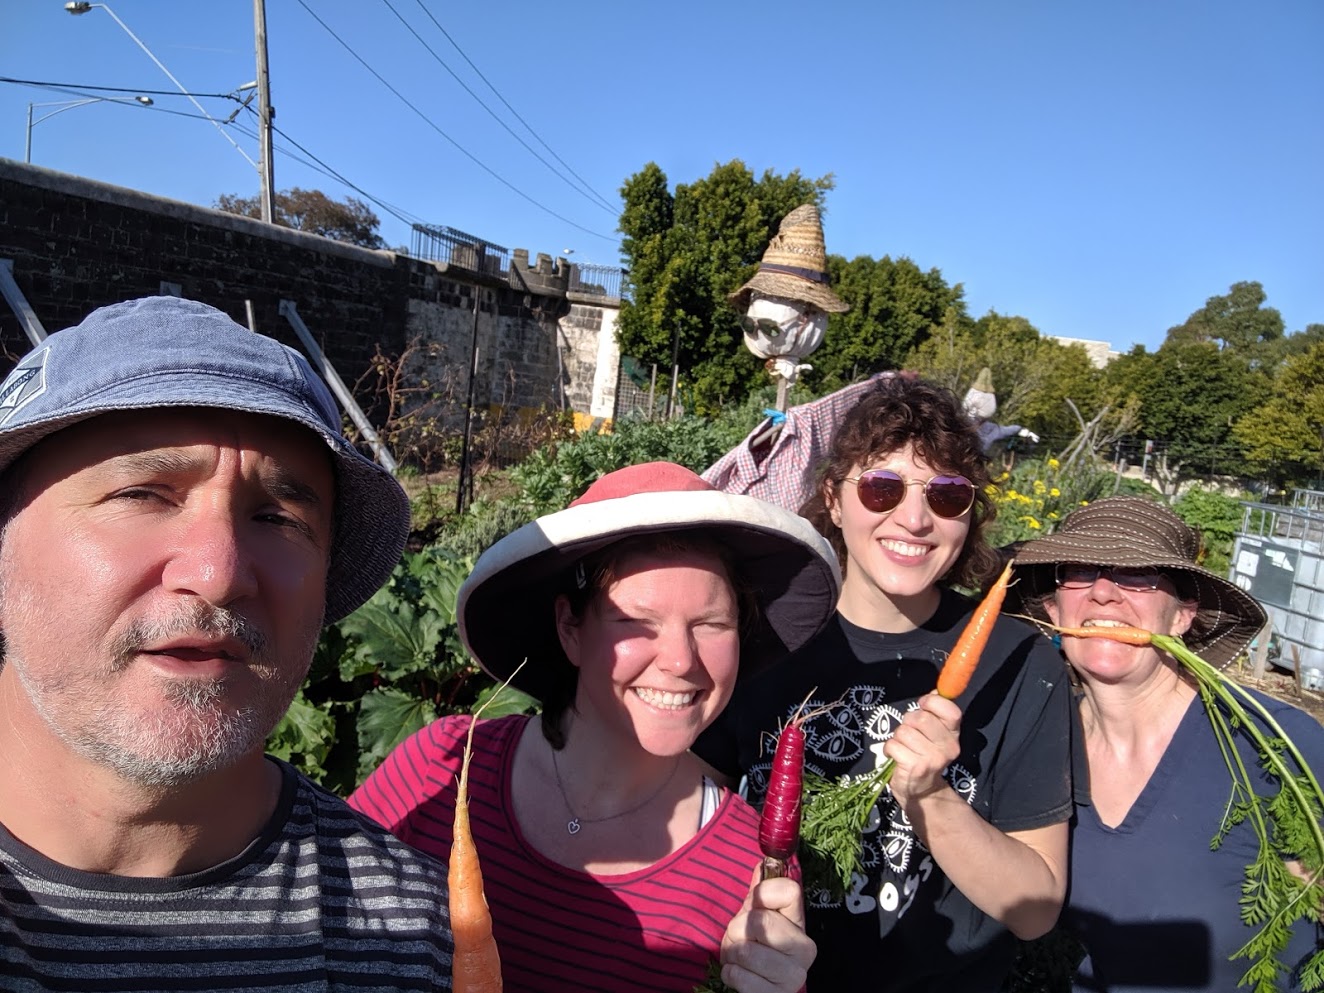 Pentridge Community Garden is welcoming new members again